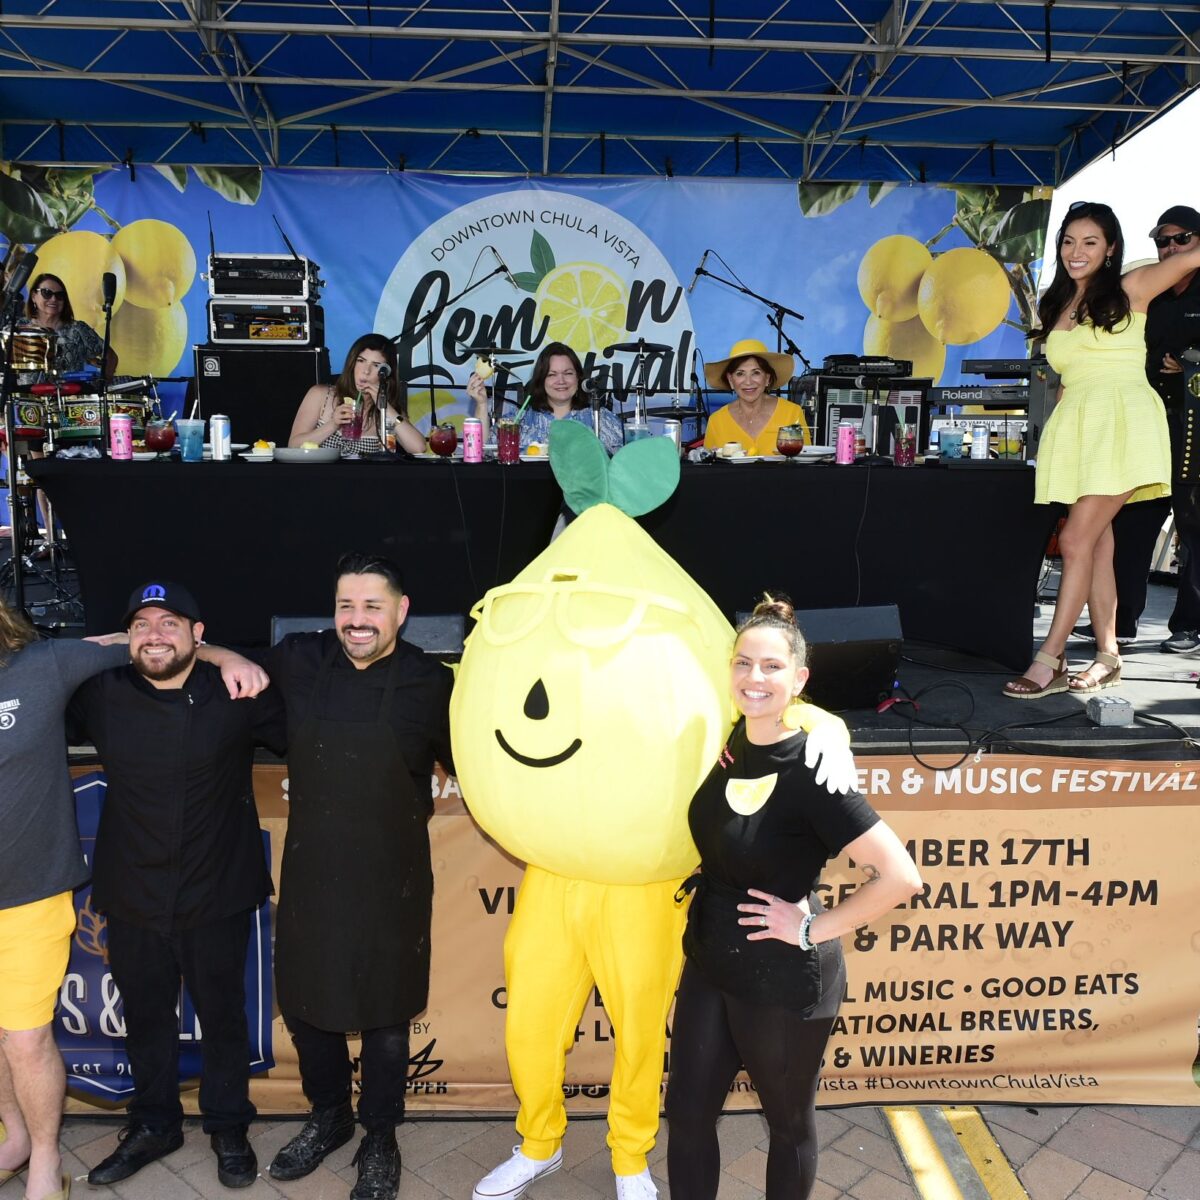 Lemon Festival At Chula Vista Is Back Bigger & Better Than Ever!